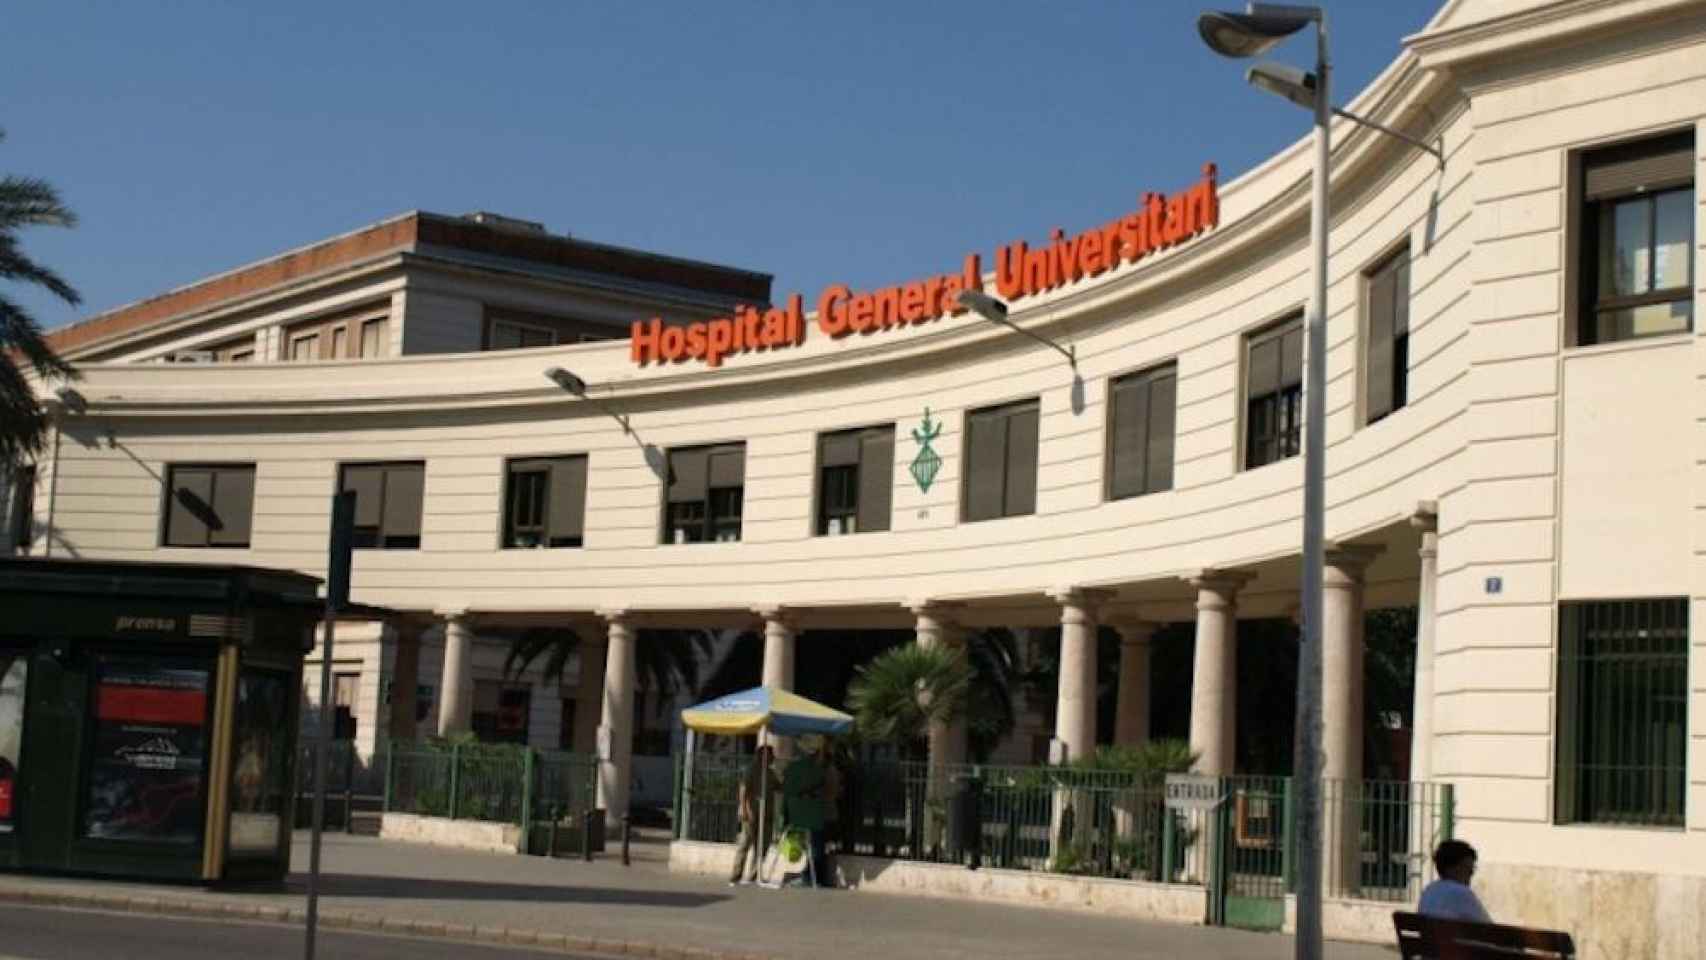 Una foto del Hospital Universitari donde fue atendida la víctima